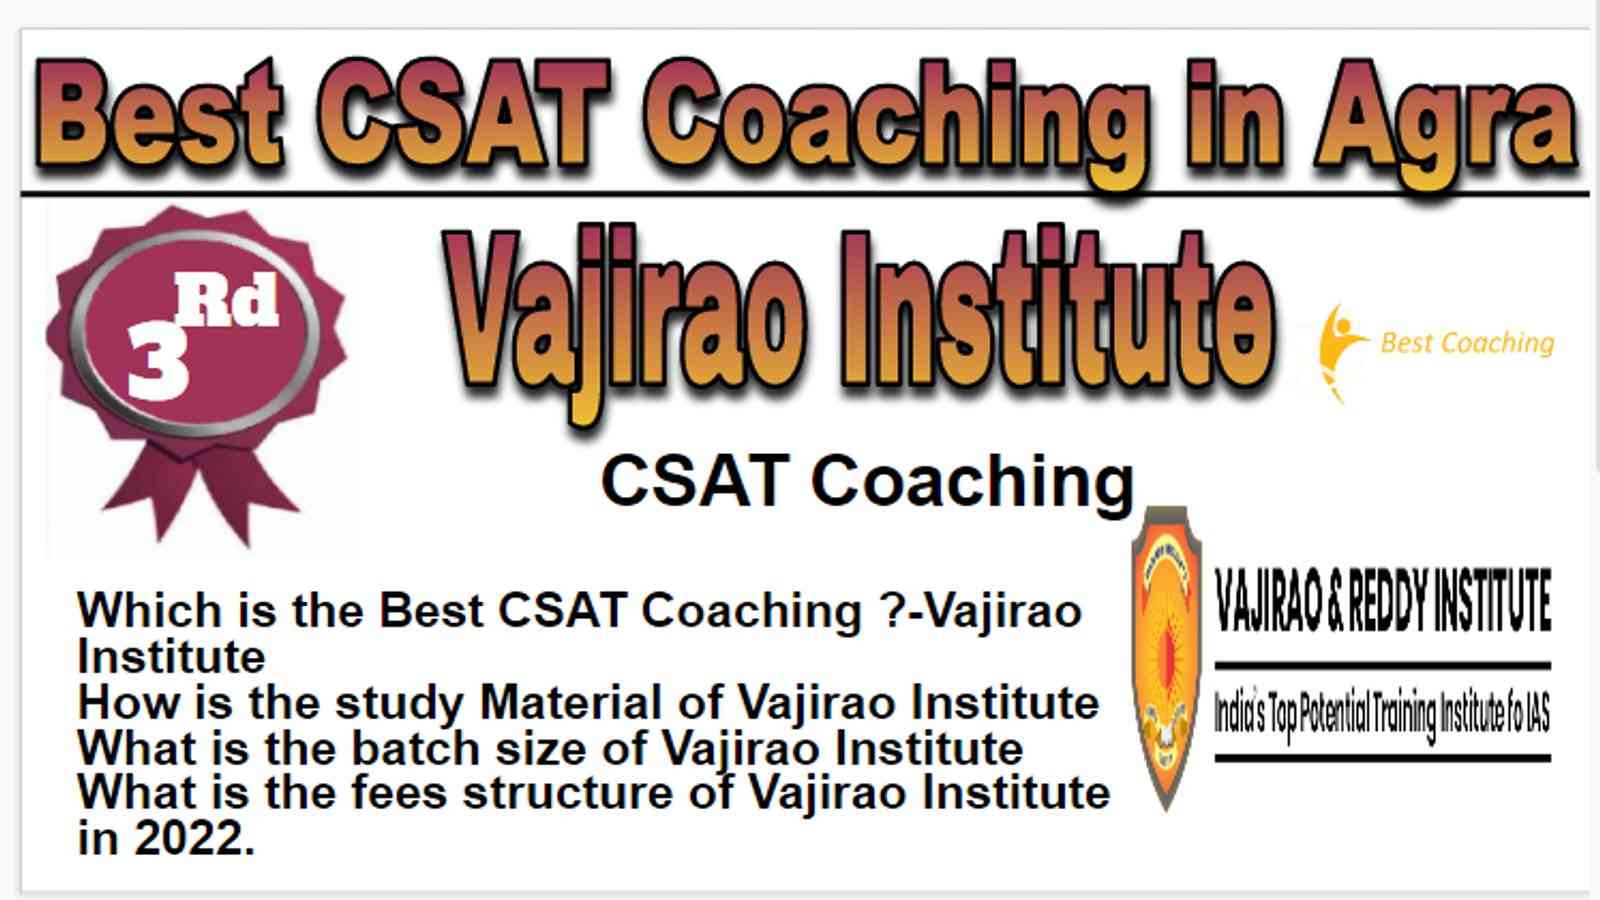 Rank 3 Best CSAT Coaching in Agra